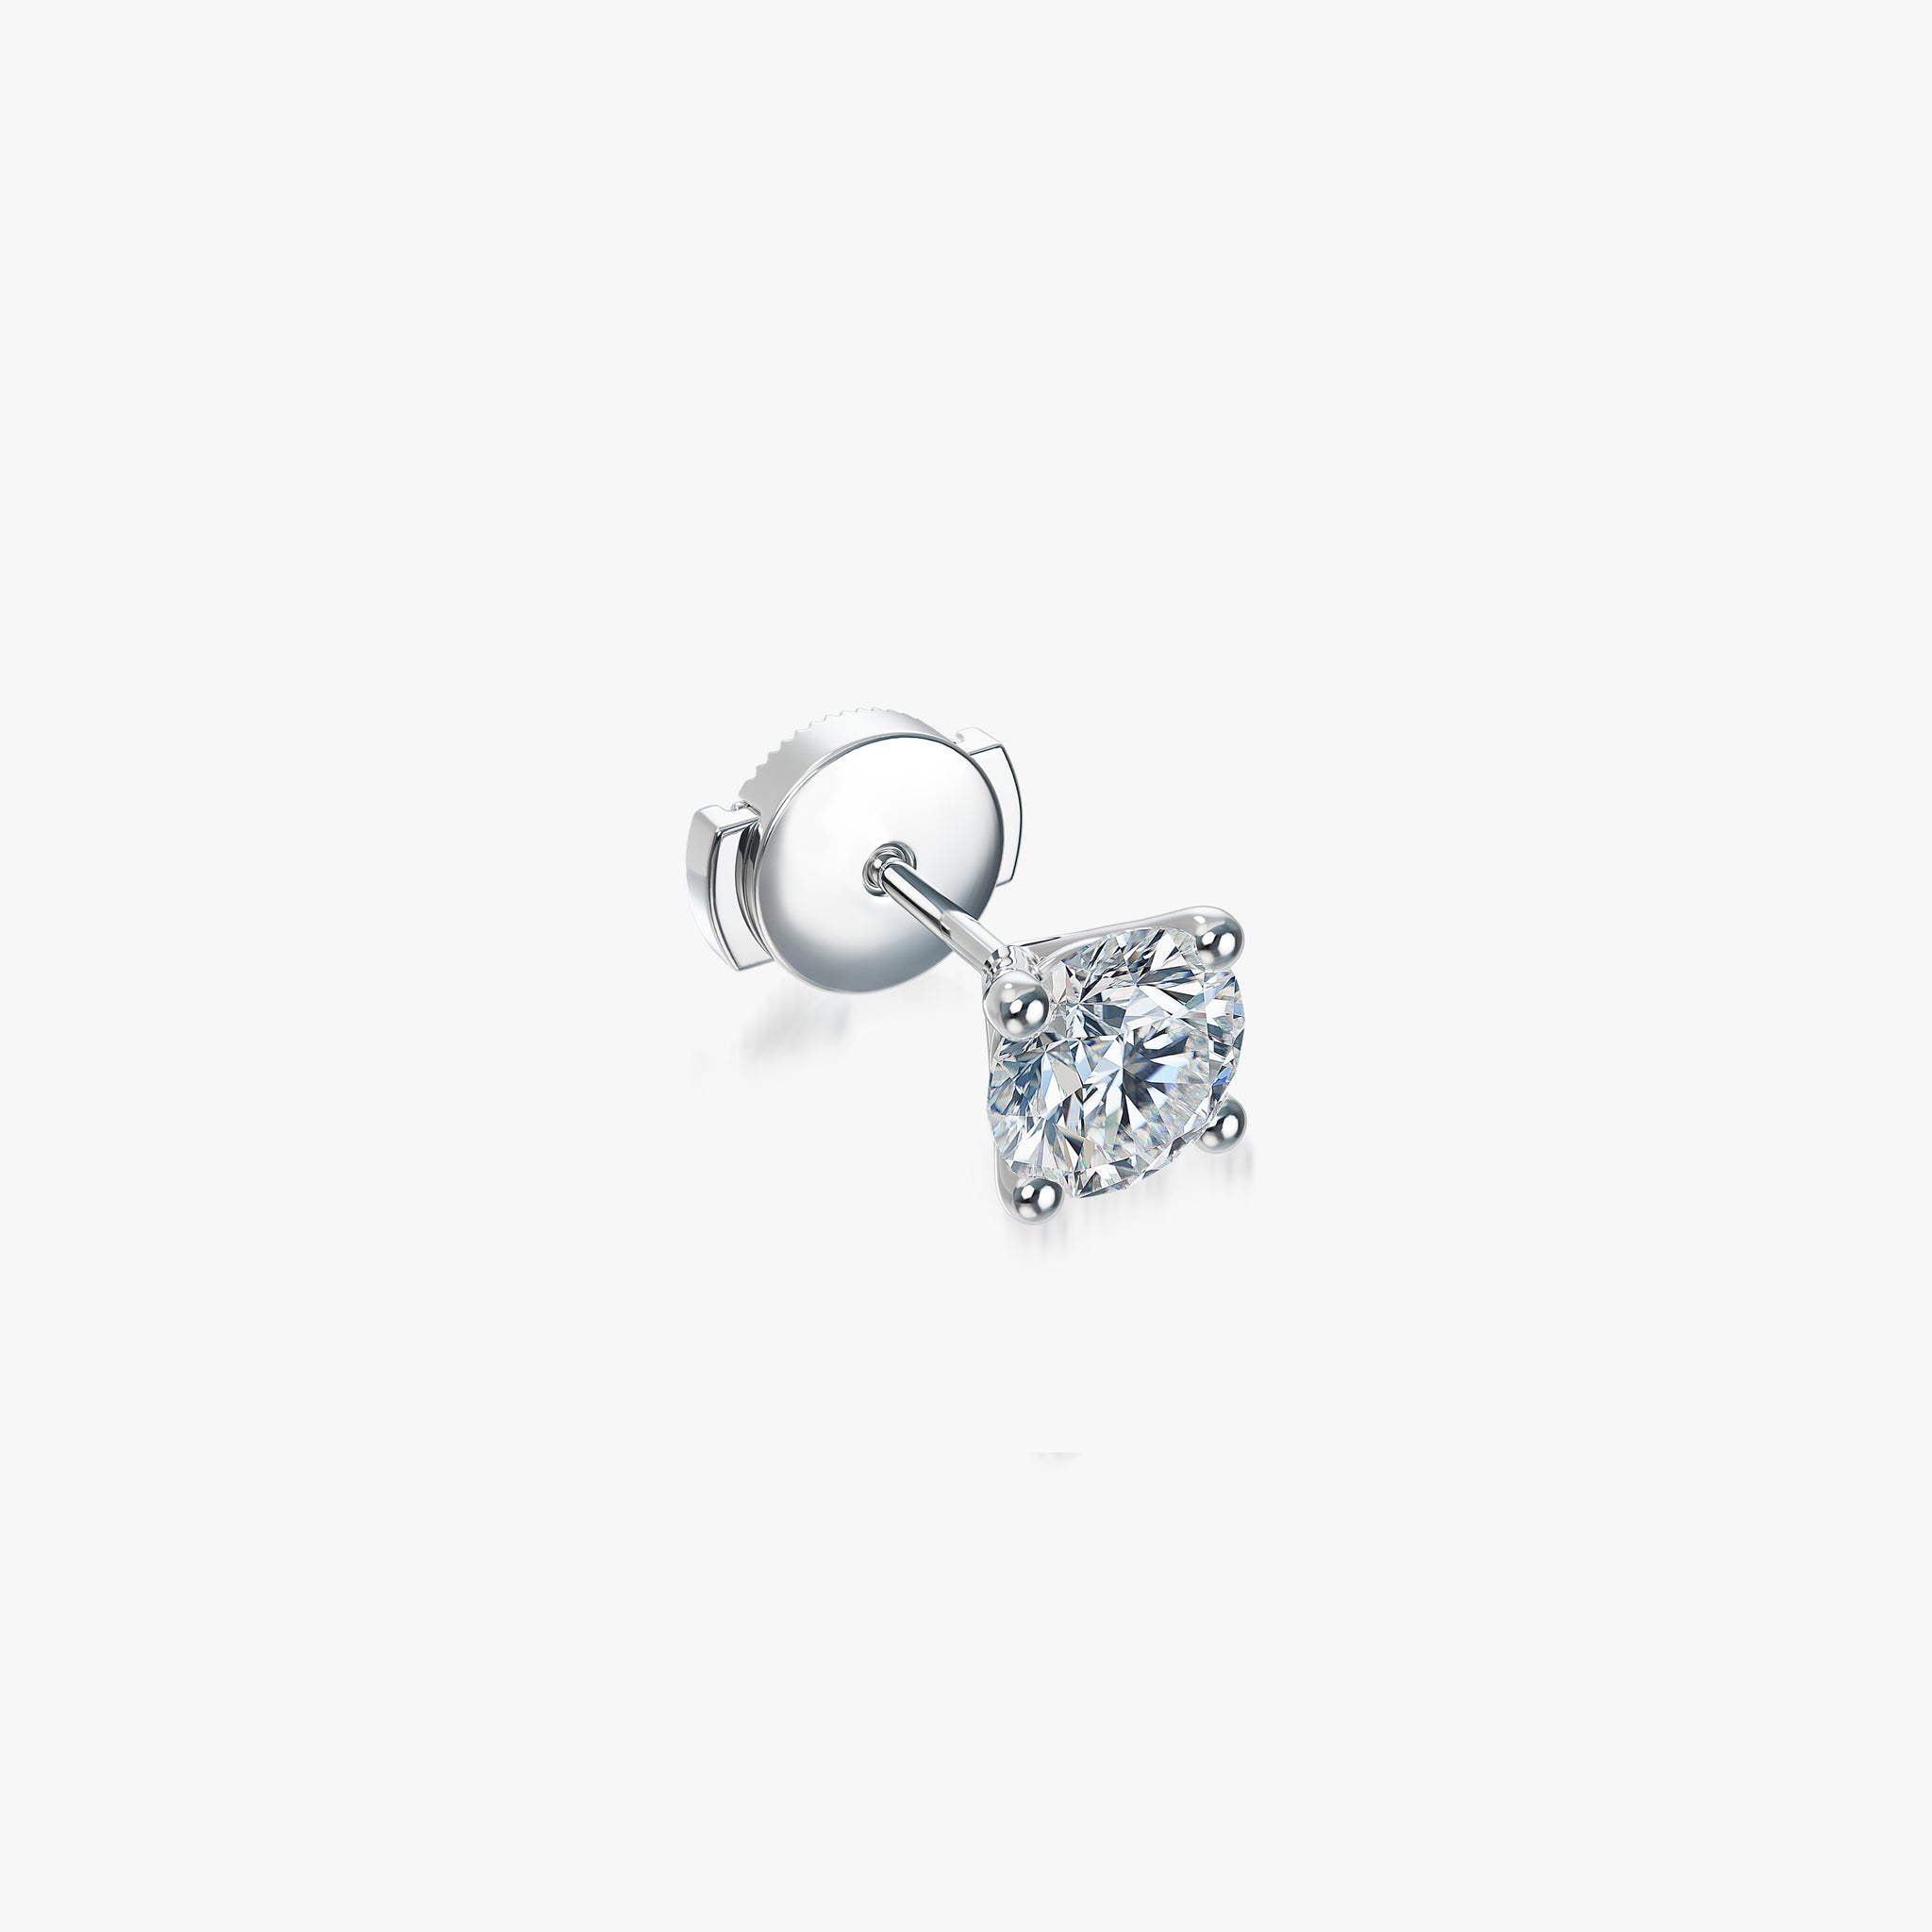 J'EVAR 18KT White Gold ALTR Lab Grown Diamond Stud Earrings with Guardian Backs Lock View | Pair / 2.00 CT